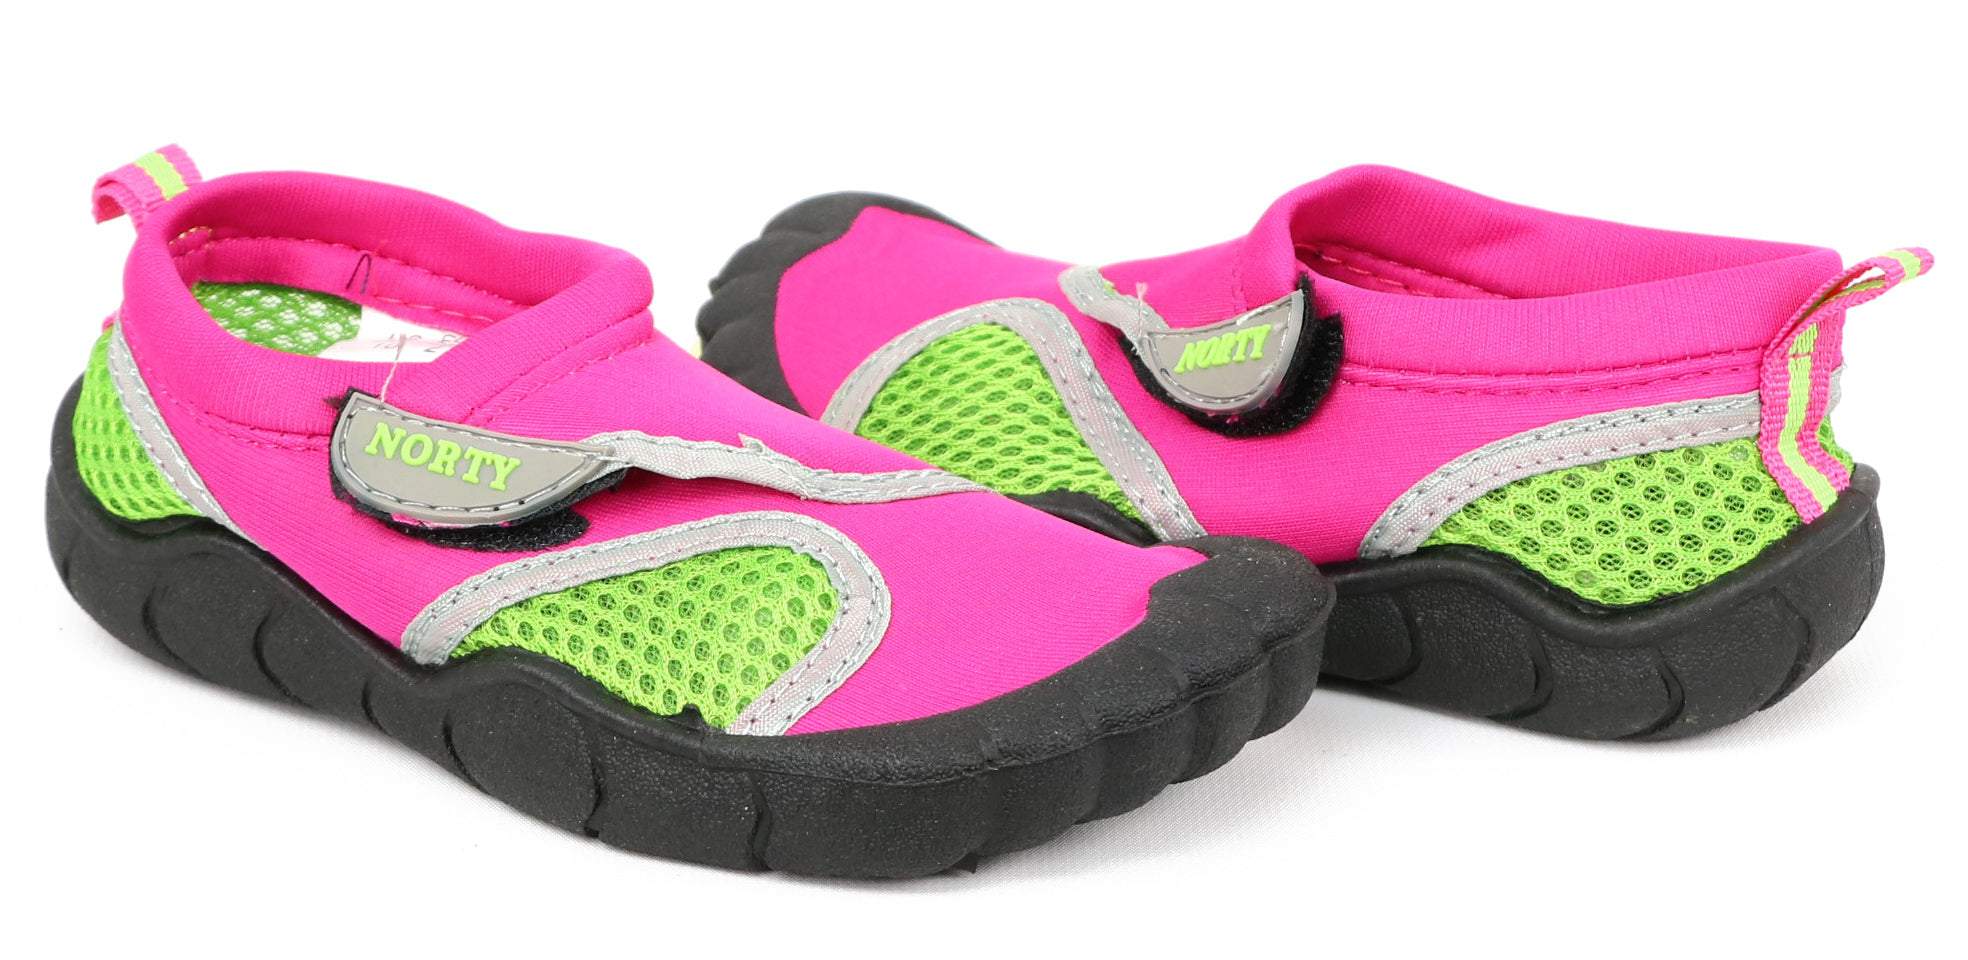 Norty Girls Velcro Aqua Socks Pool Beach Water Shoe, Sizes 5-10 – S&D Kids